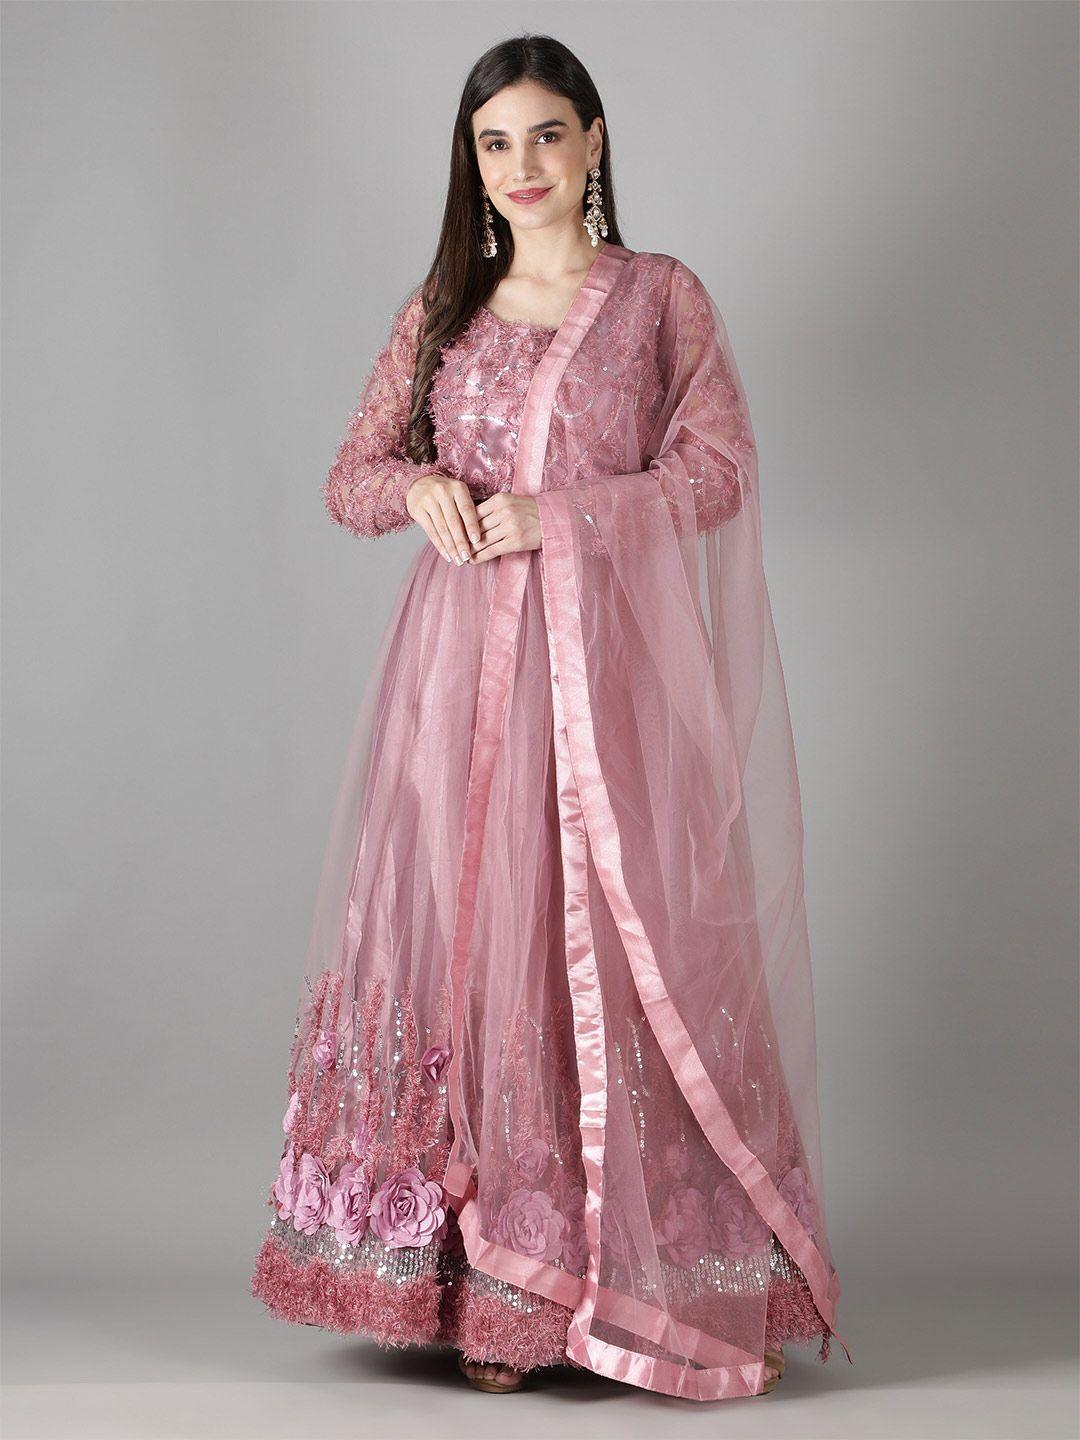 bollyclues embellished semi-stitched lehenga & unstitched blouse with dupatta